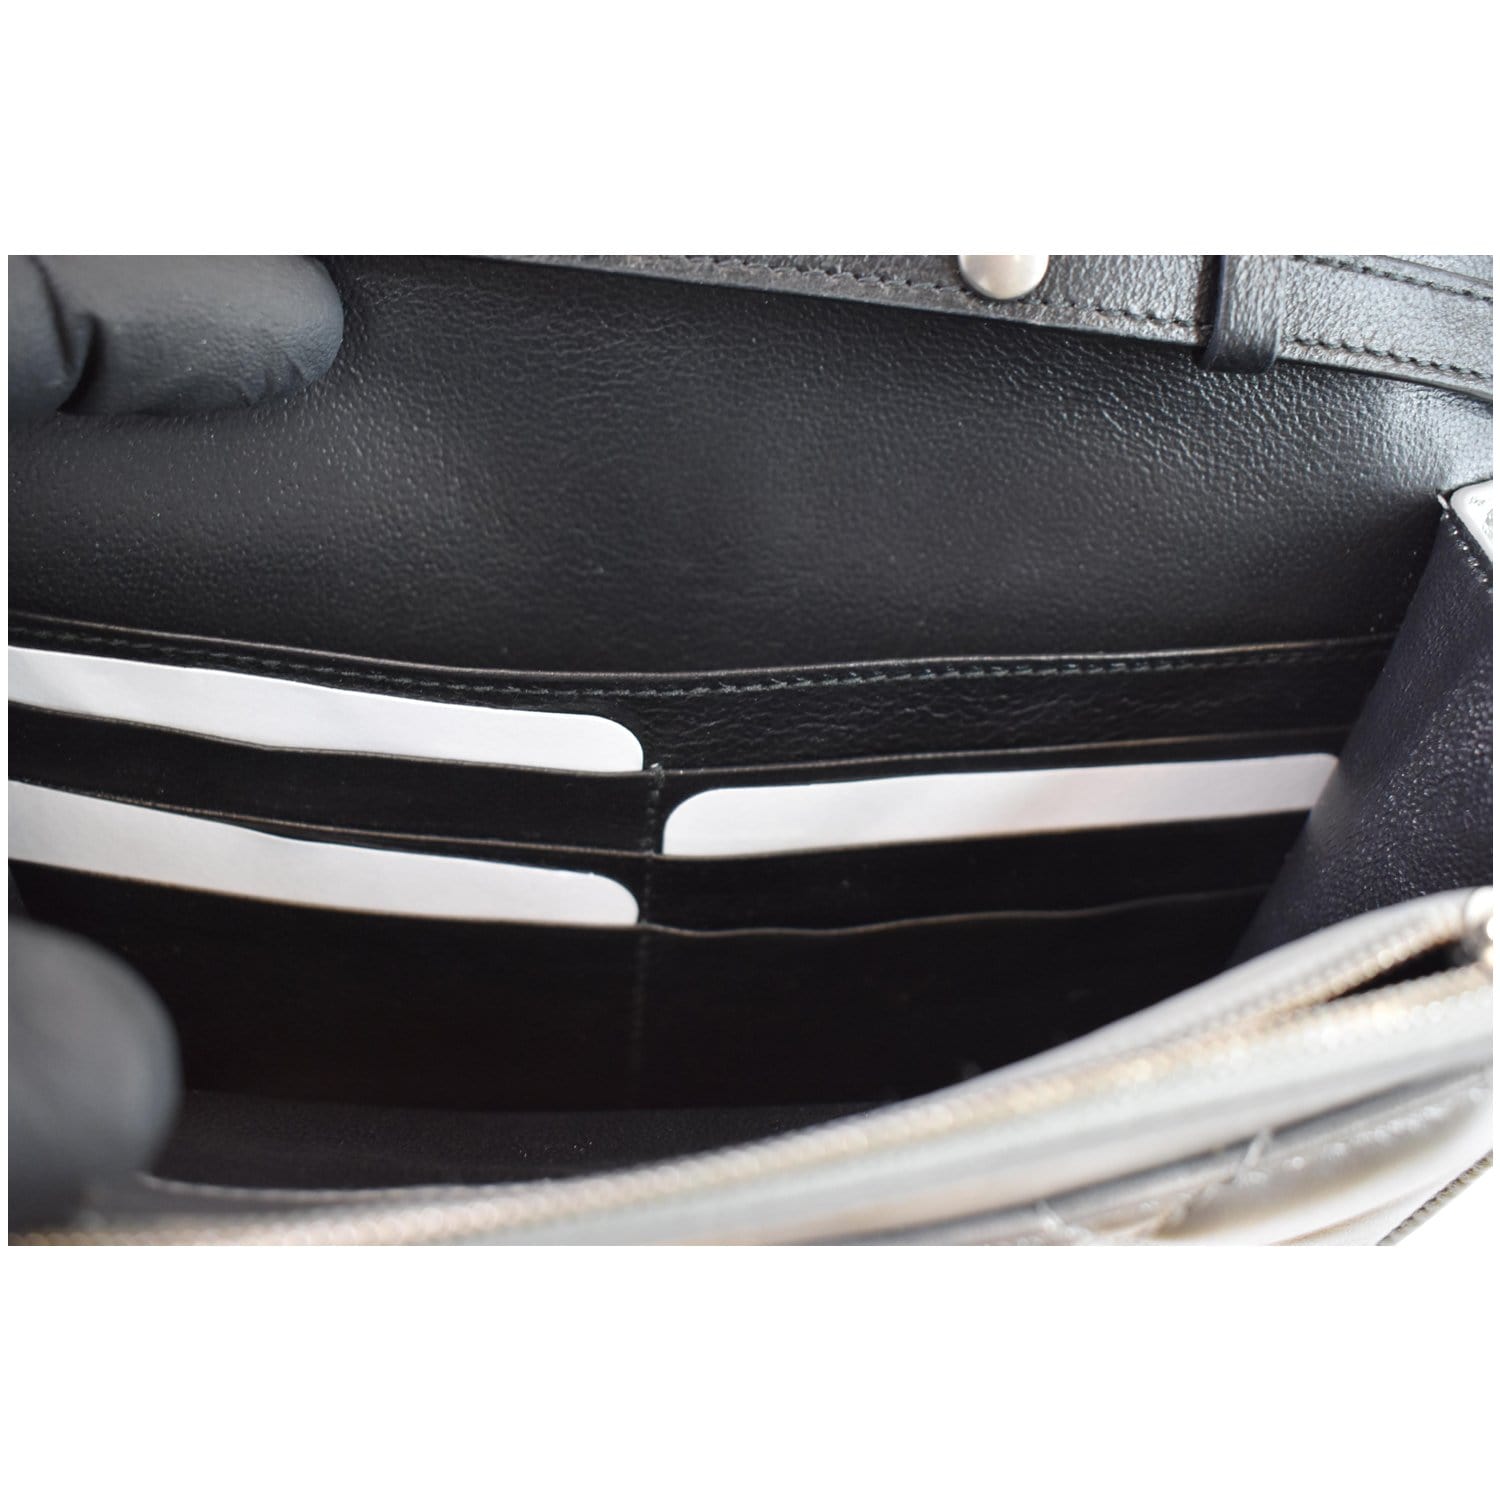 Bb chain leather crossbody bag Balenciaga White in Leather - 26567254